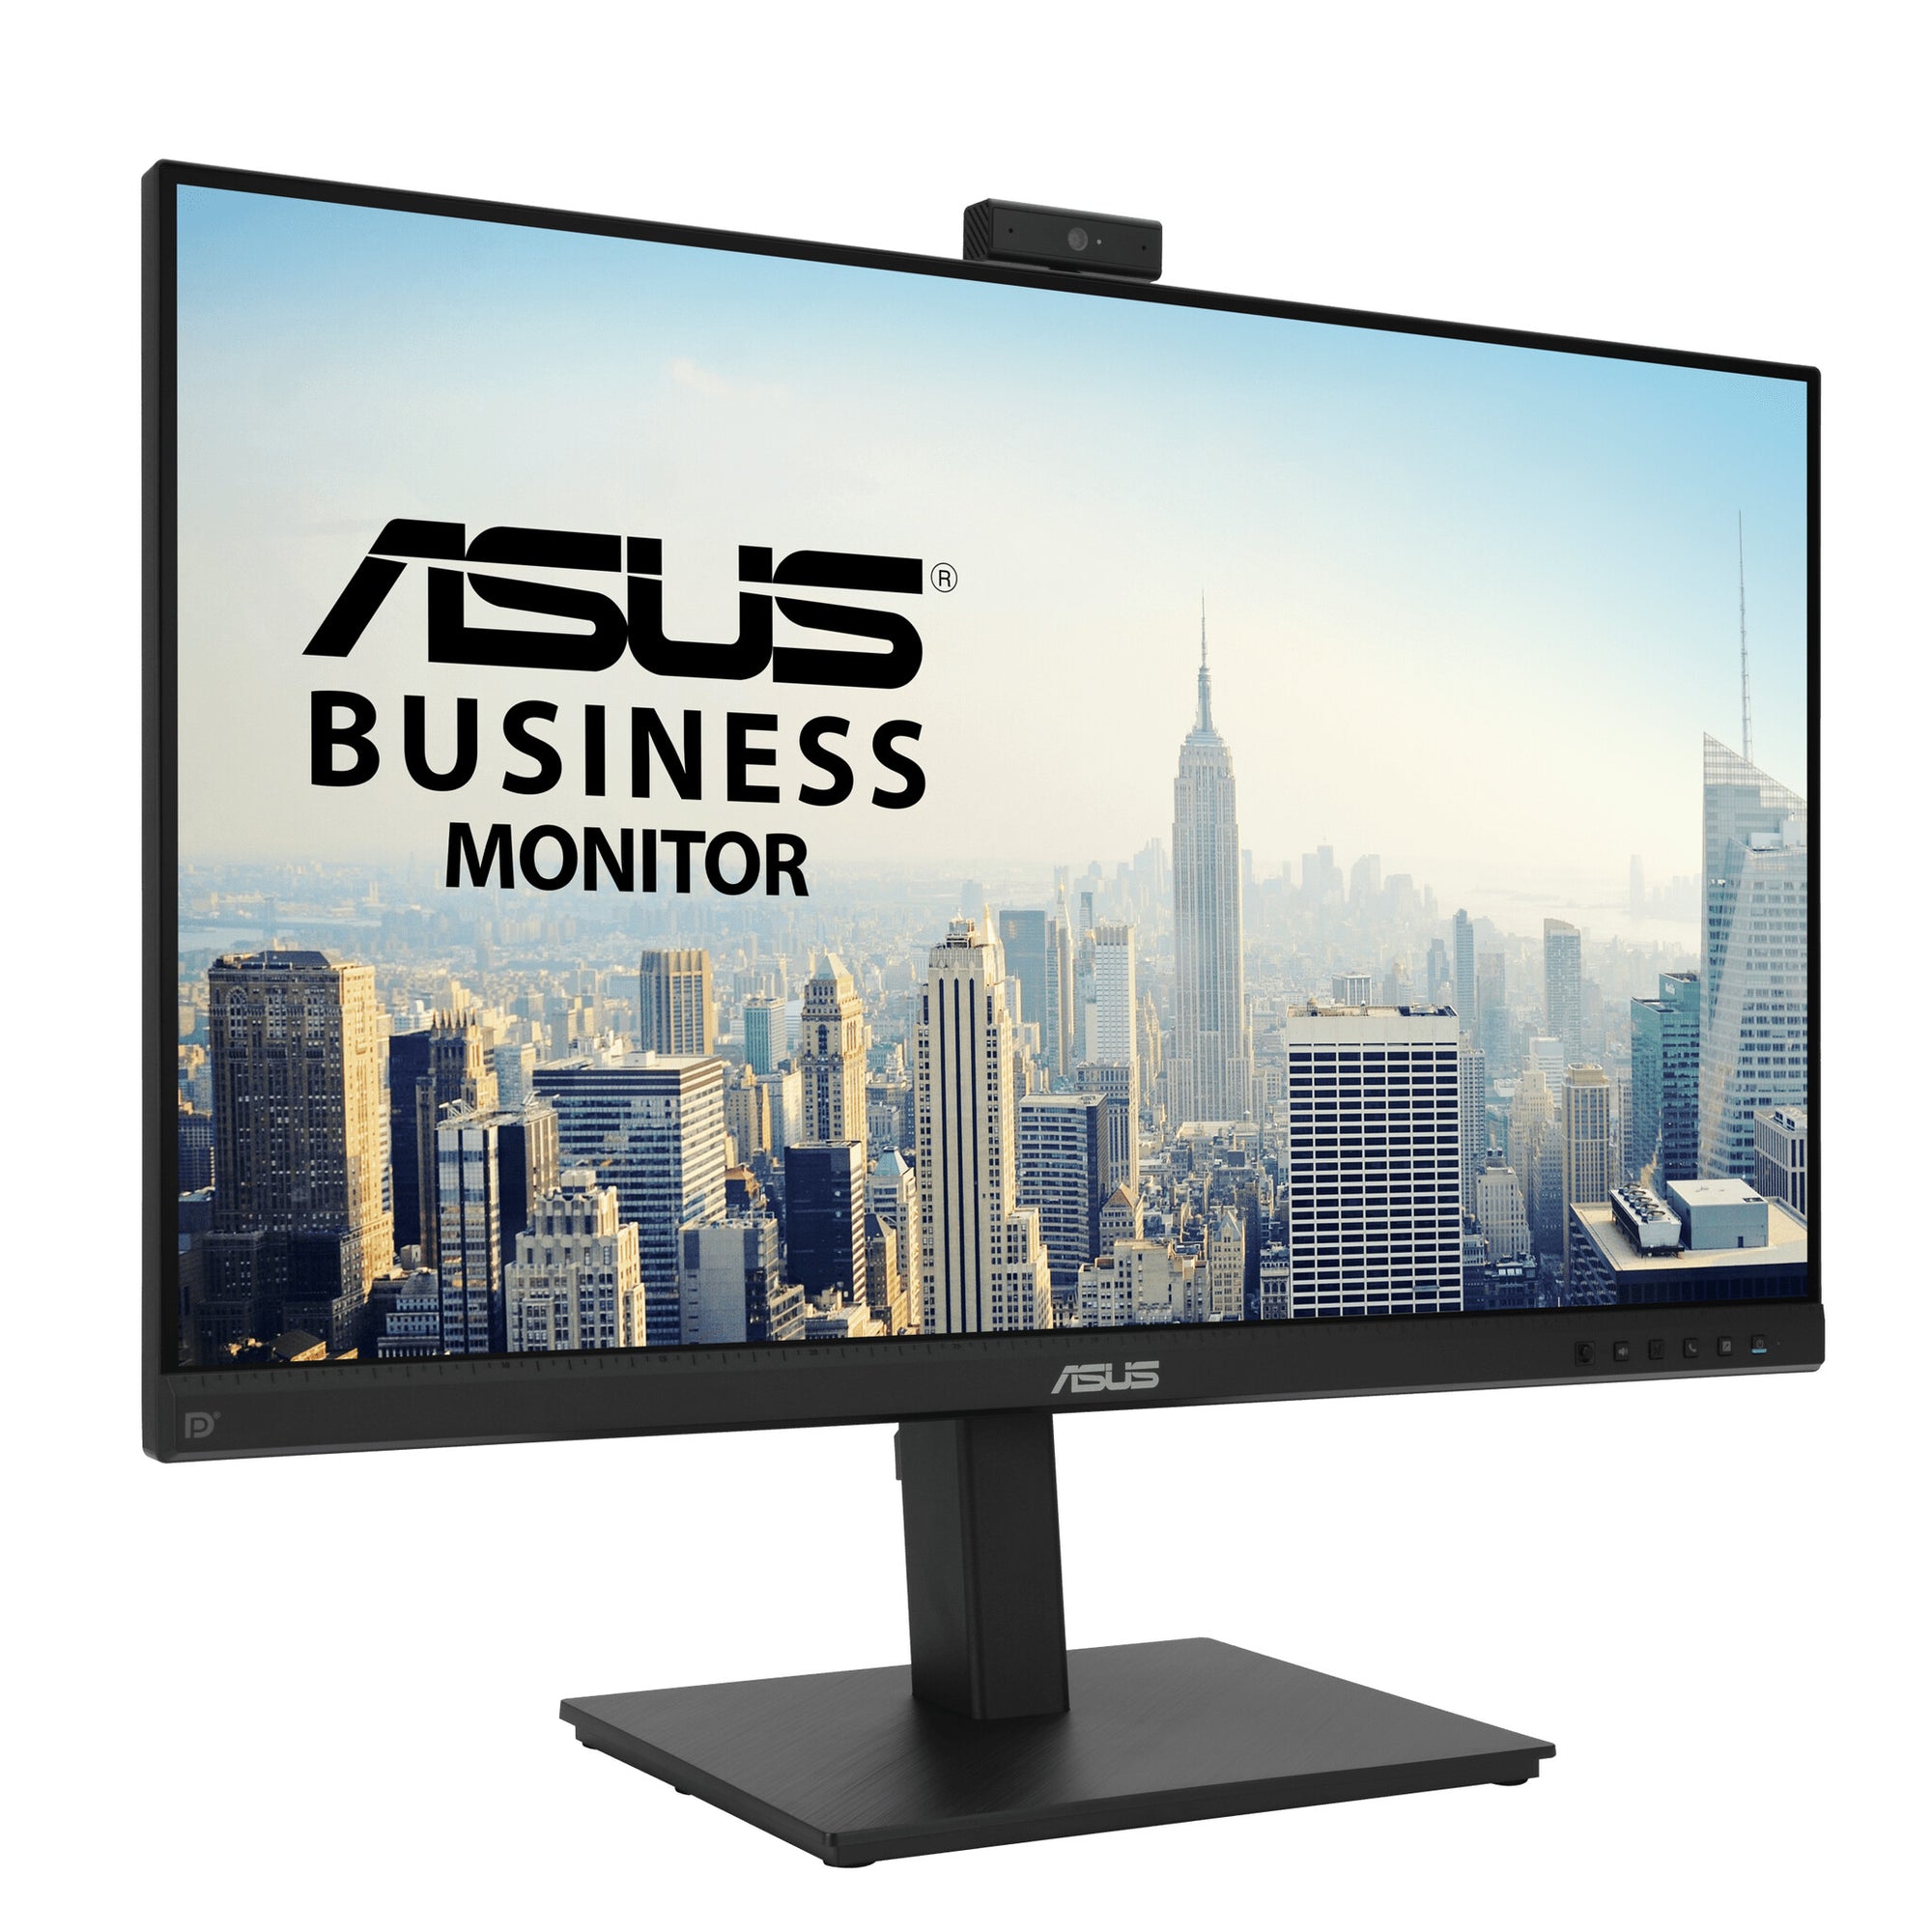 PC Components - Monitors - Asus - Clove Technology